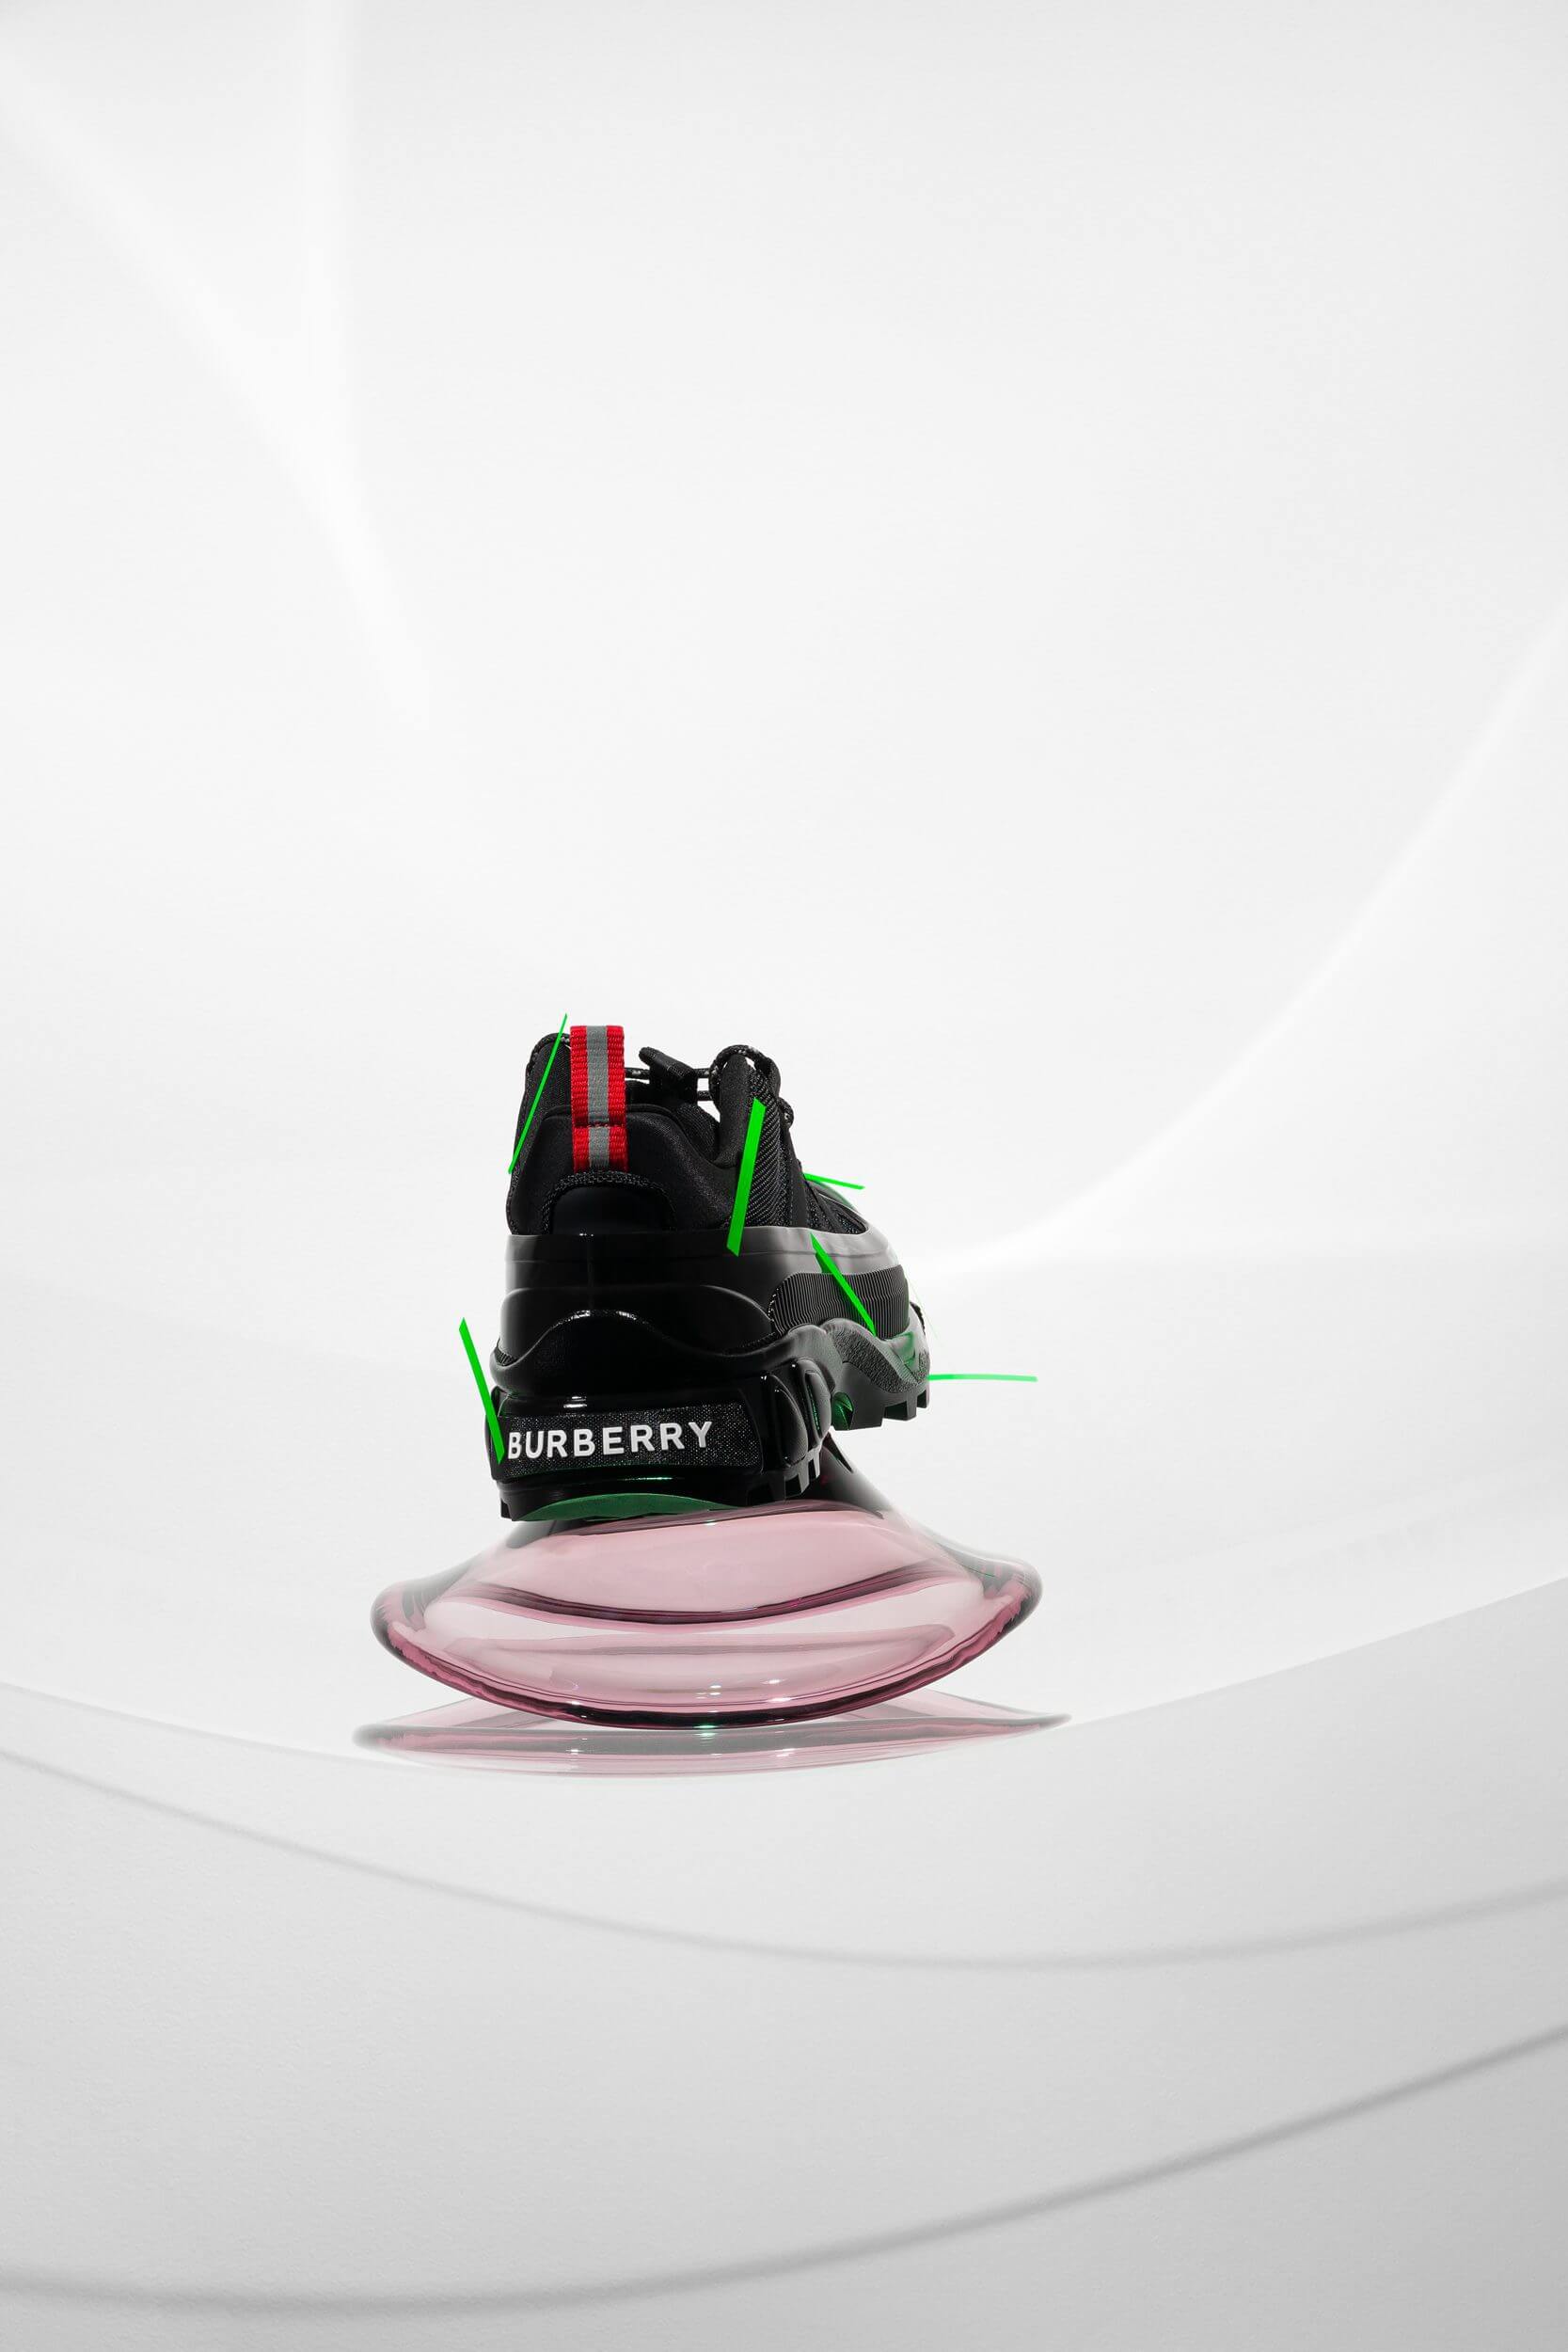 Burberry-arthur_sneakers-trainers-advertising-product_photography-SH_1-02©Aivaras_Simonis